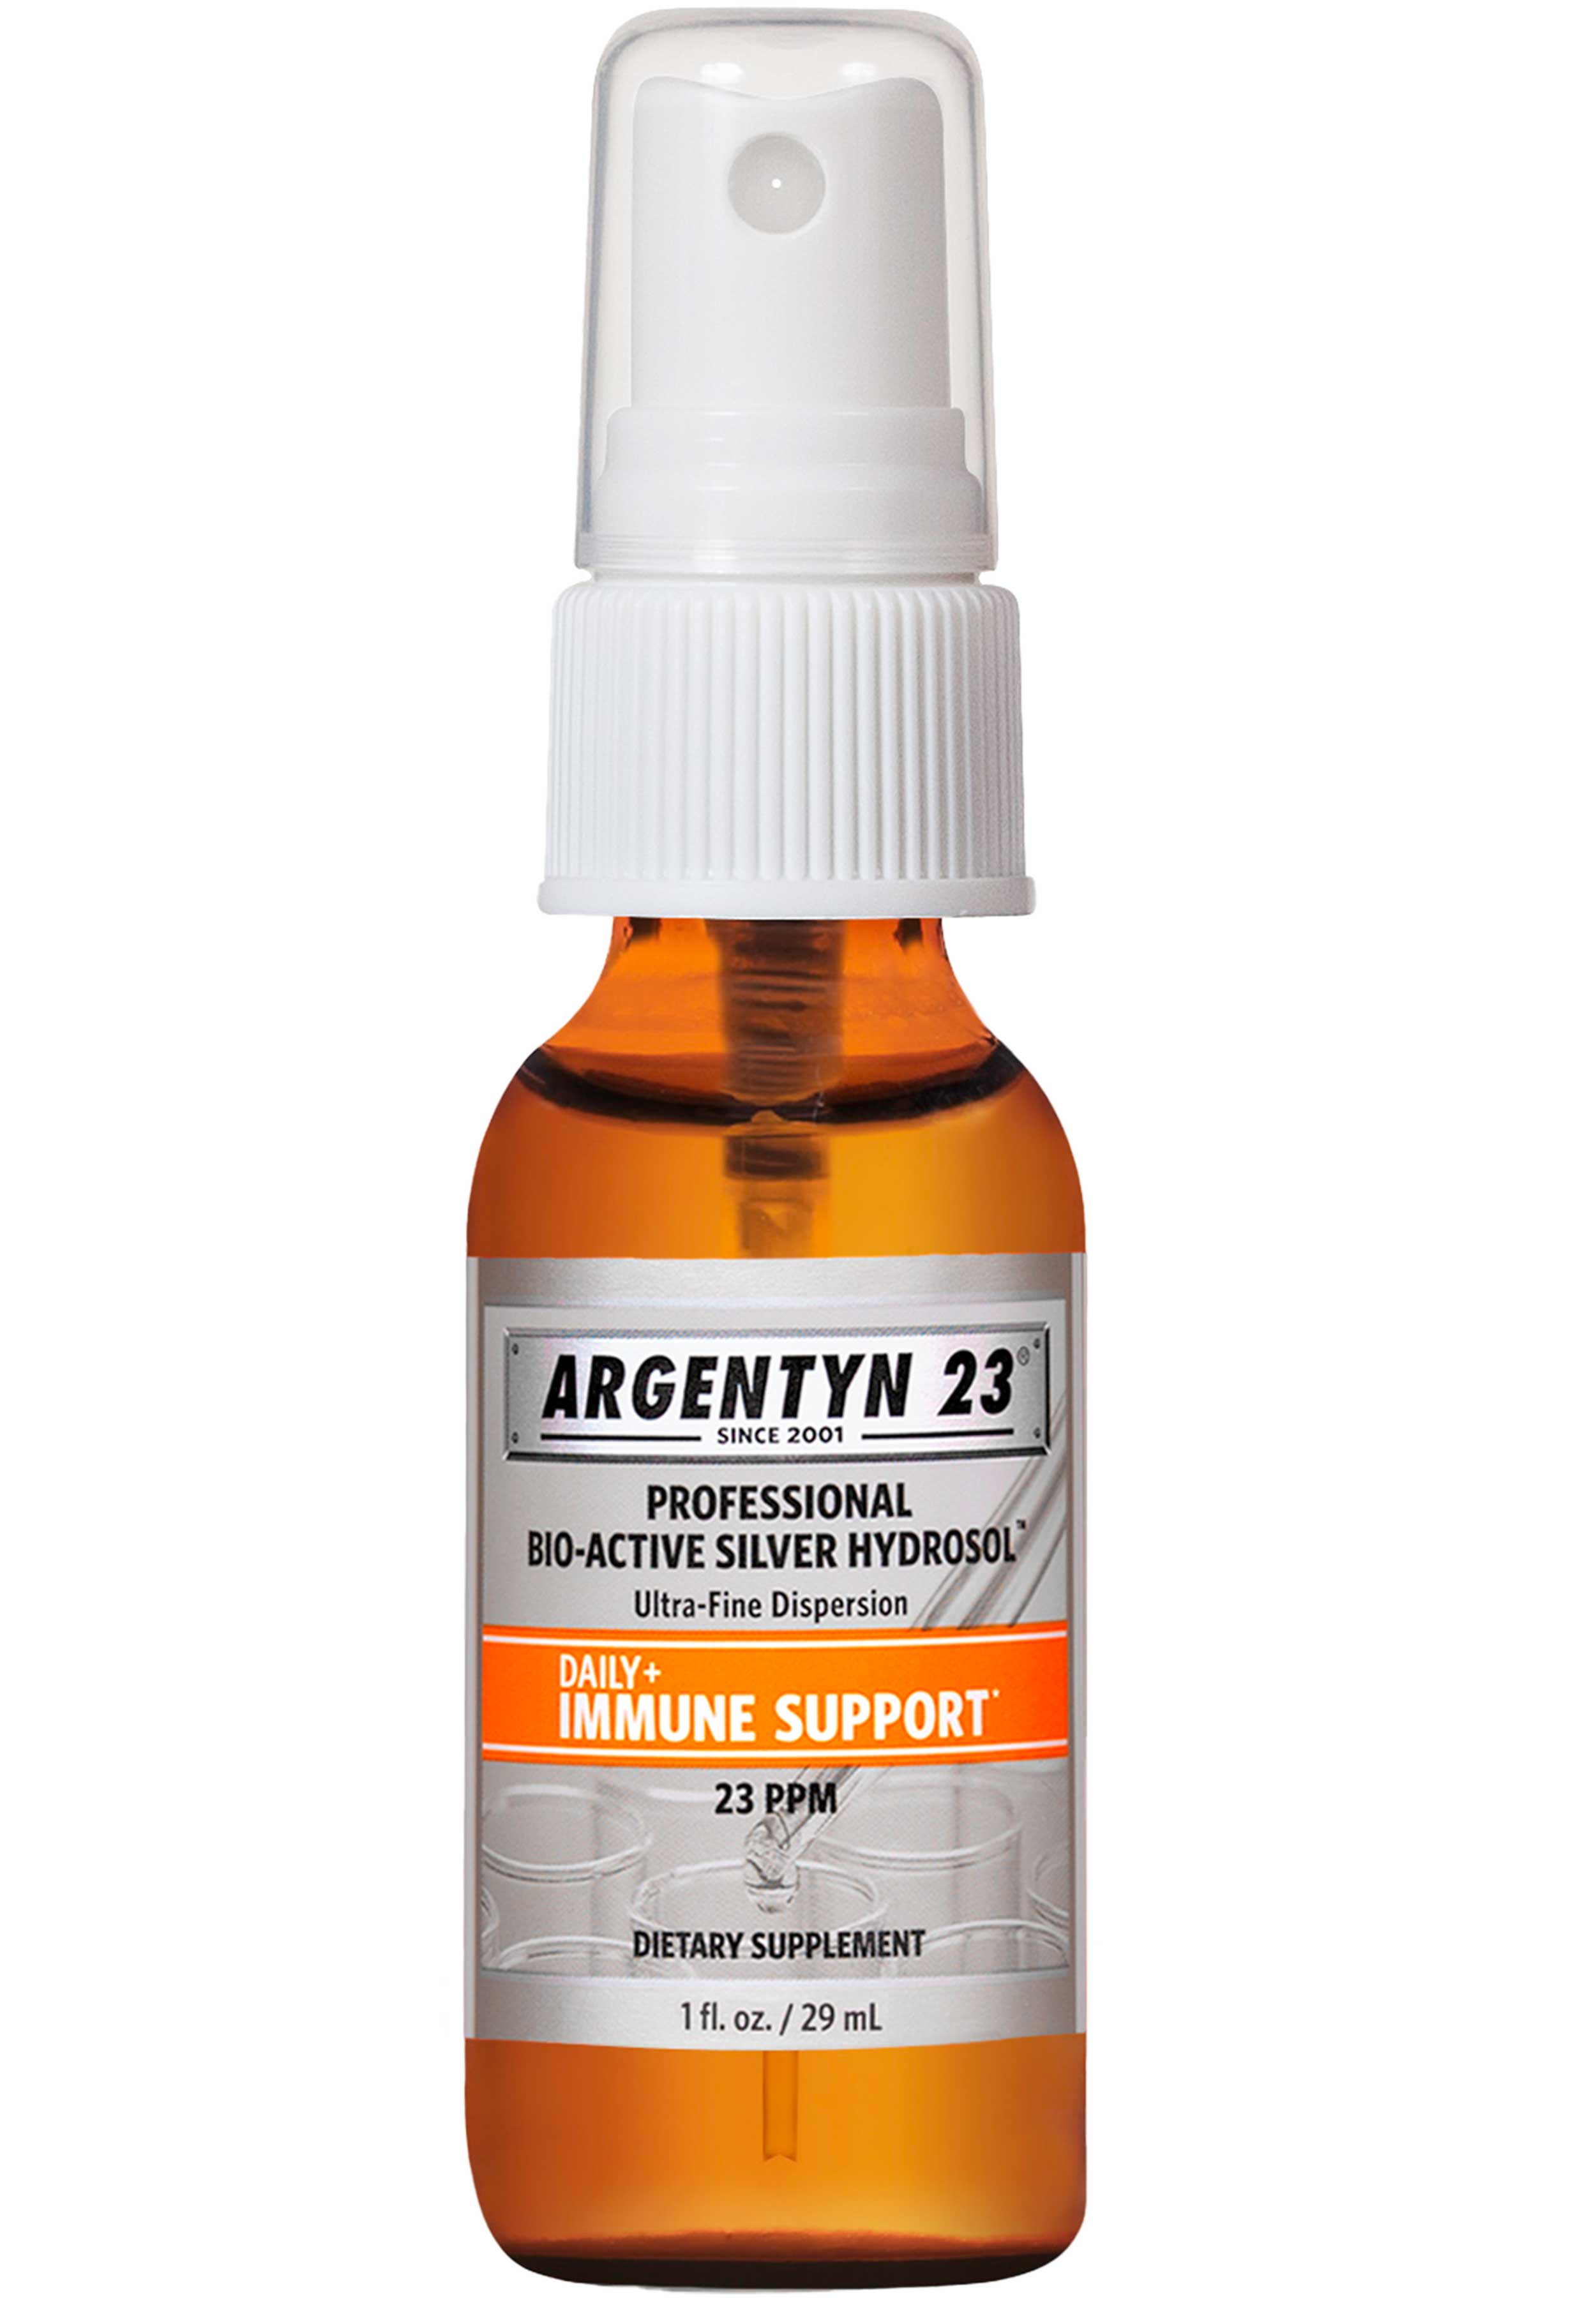 Argentyn 23 Professional Bio-Active Silver Hydrosol Daily+ Immune Support Spray